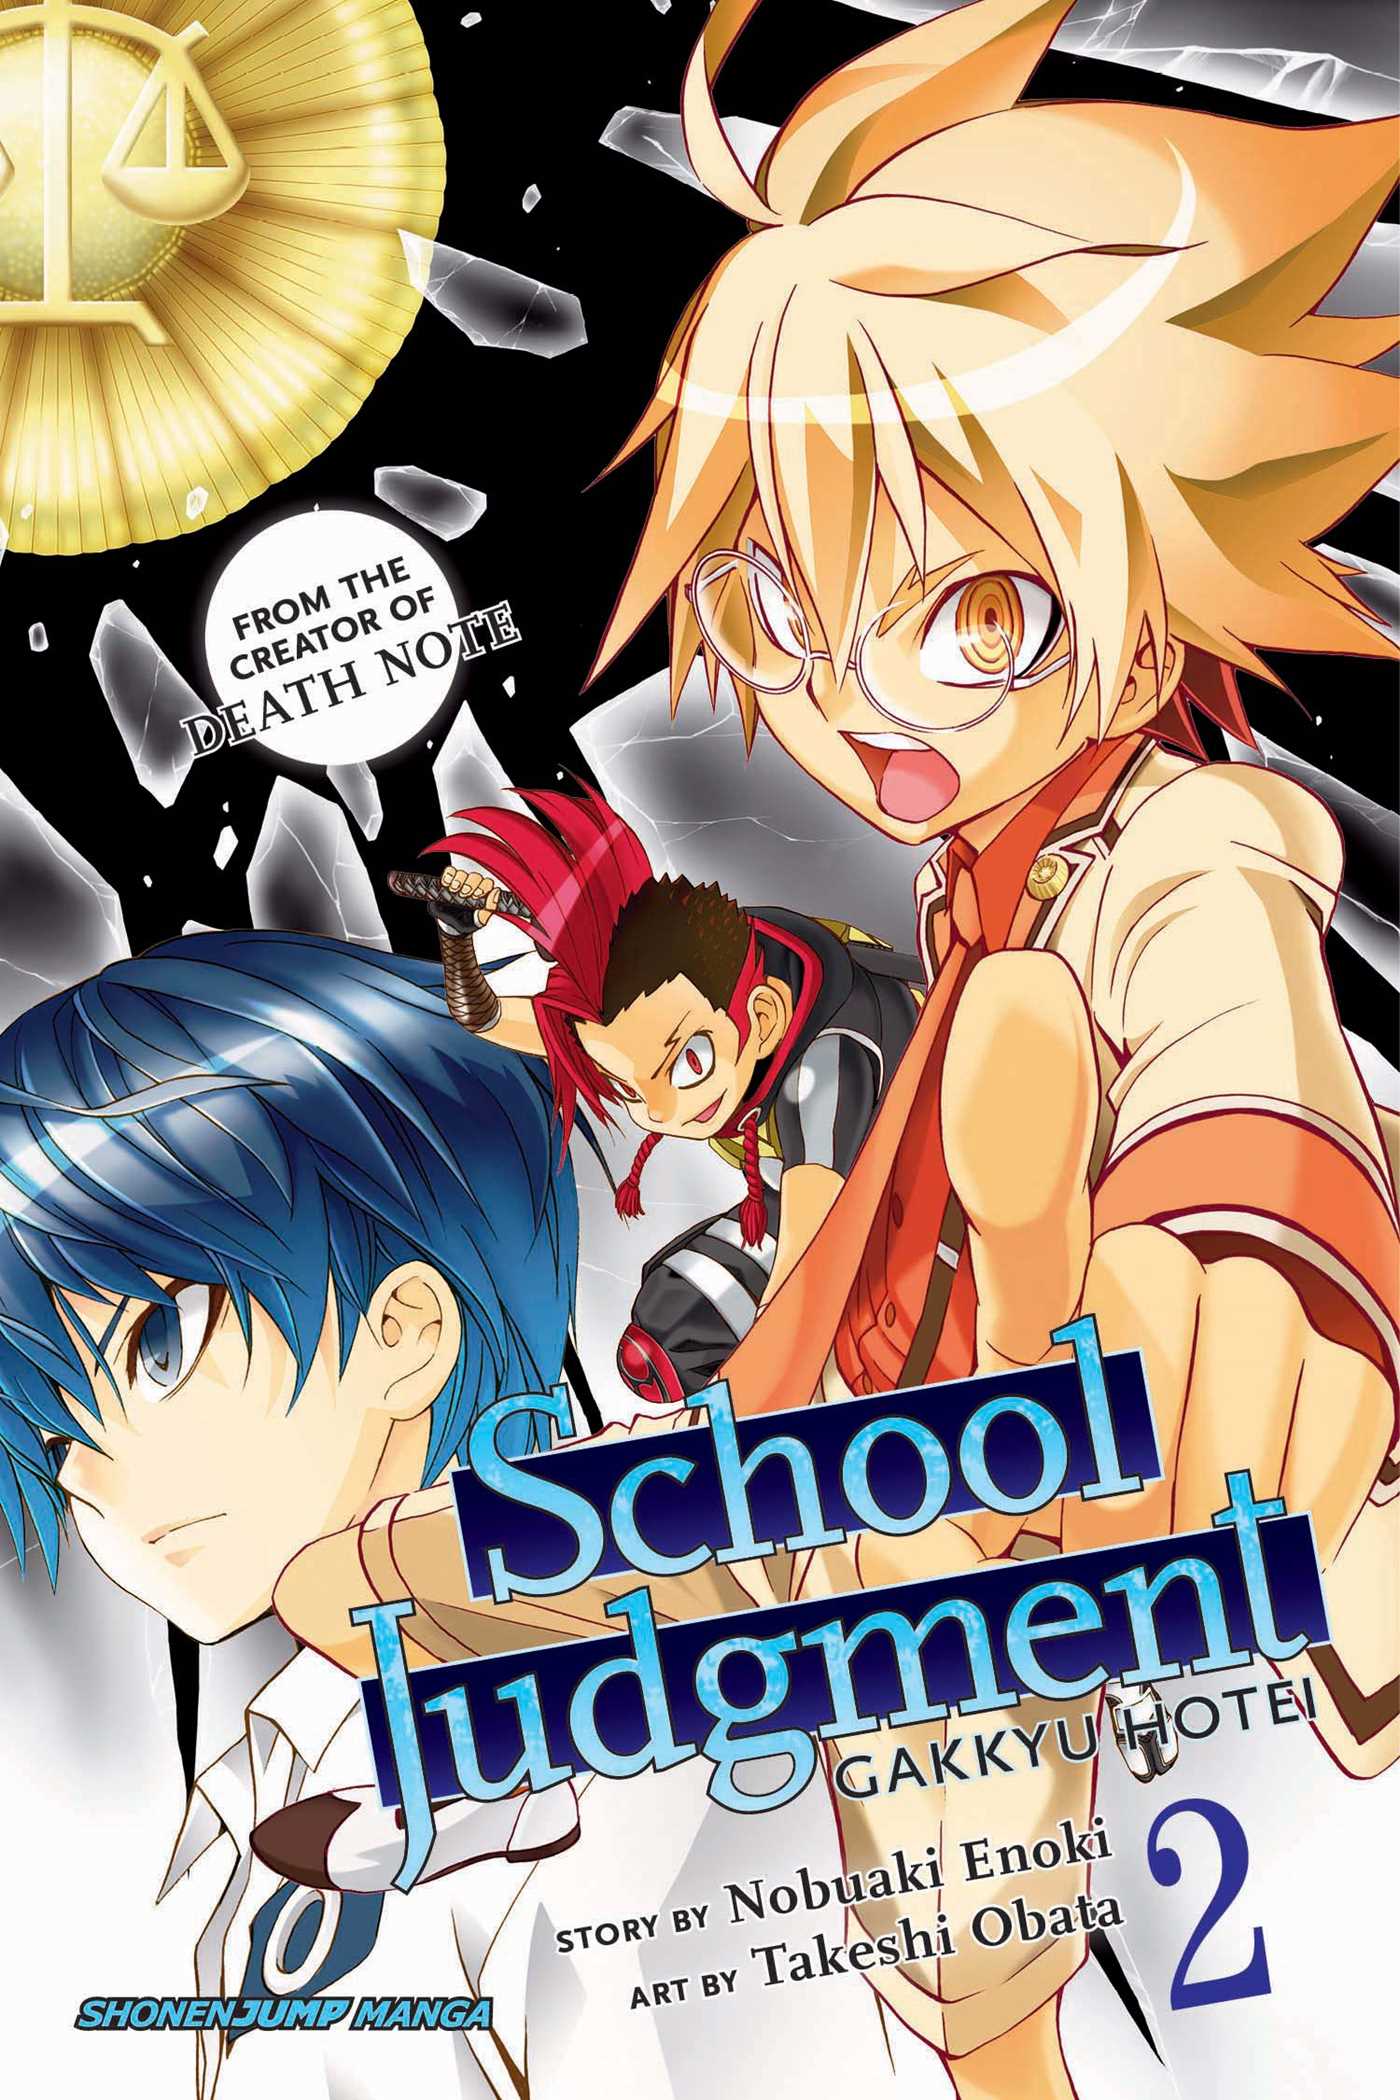 School Judgment: Gakkyu Hotei, Vol. 2